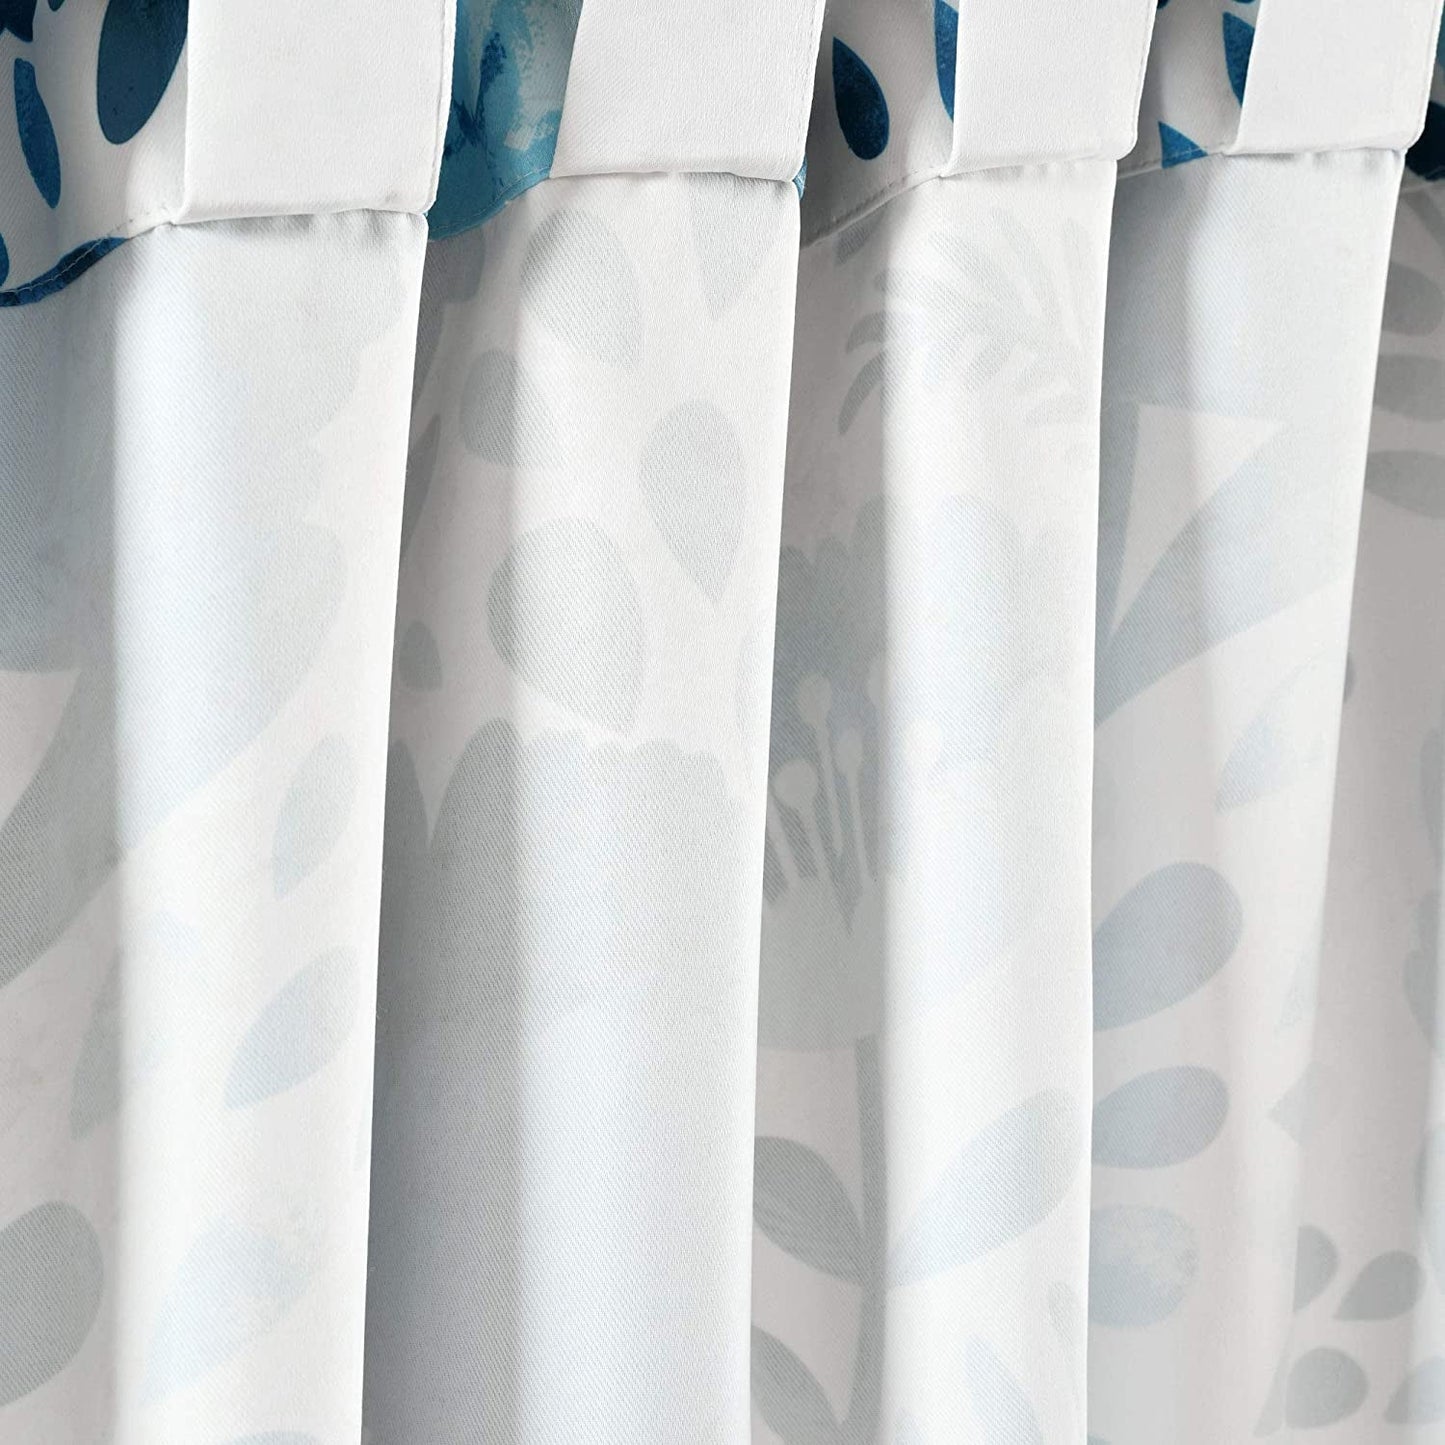 Lush Decor, Blue Poppy Garden Curtains Light Filtering Window Panel Set for Living, Dining, Bedroom (Pair) 95” X 52"